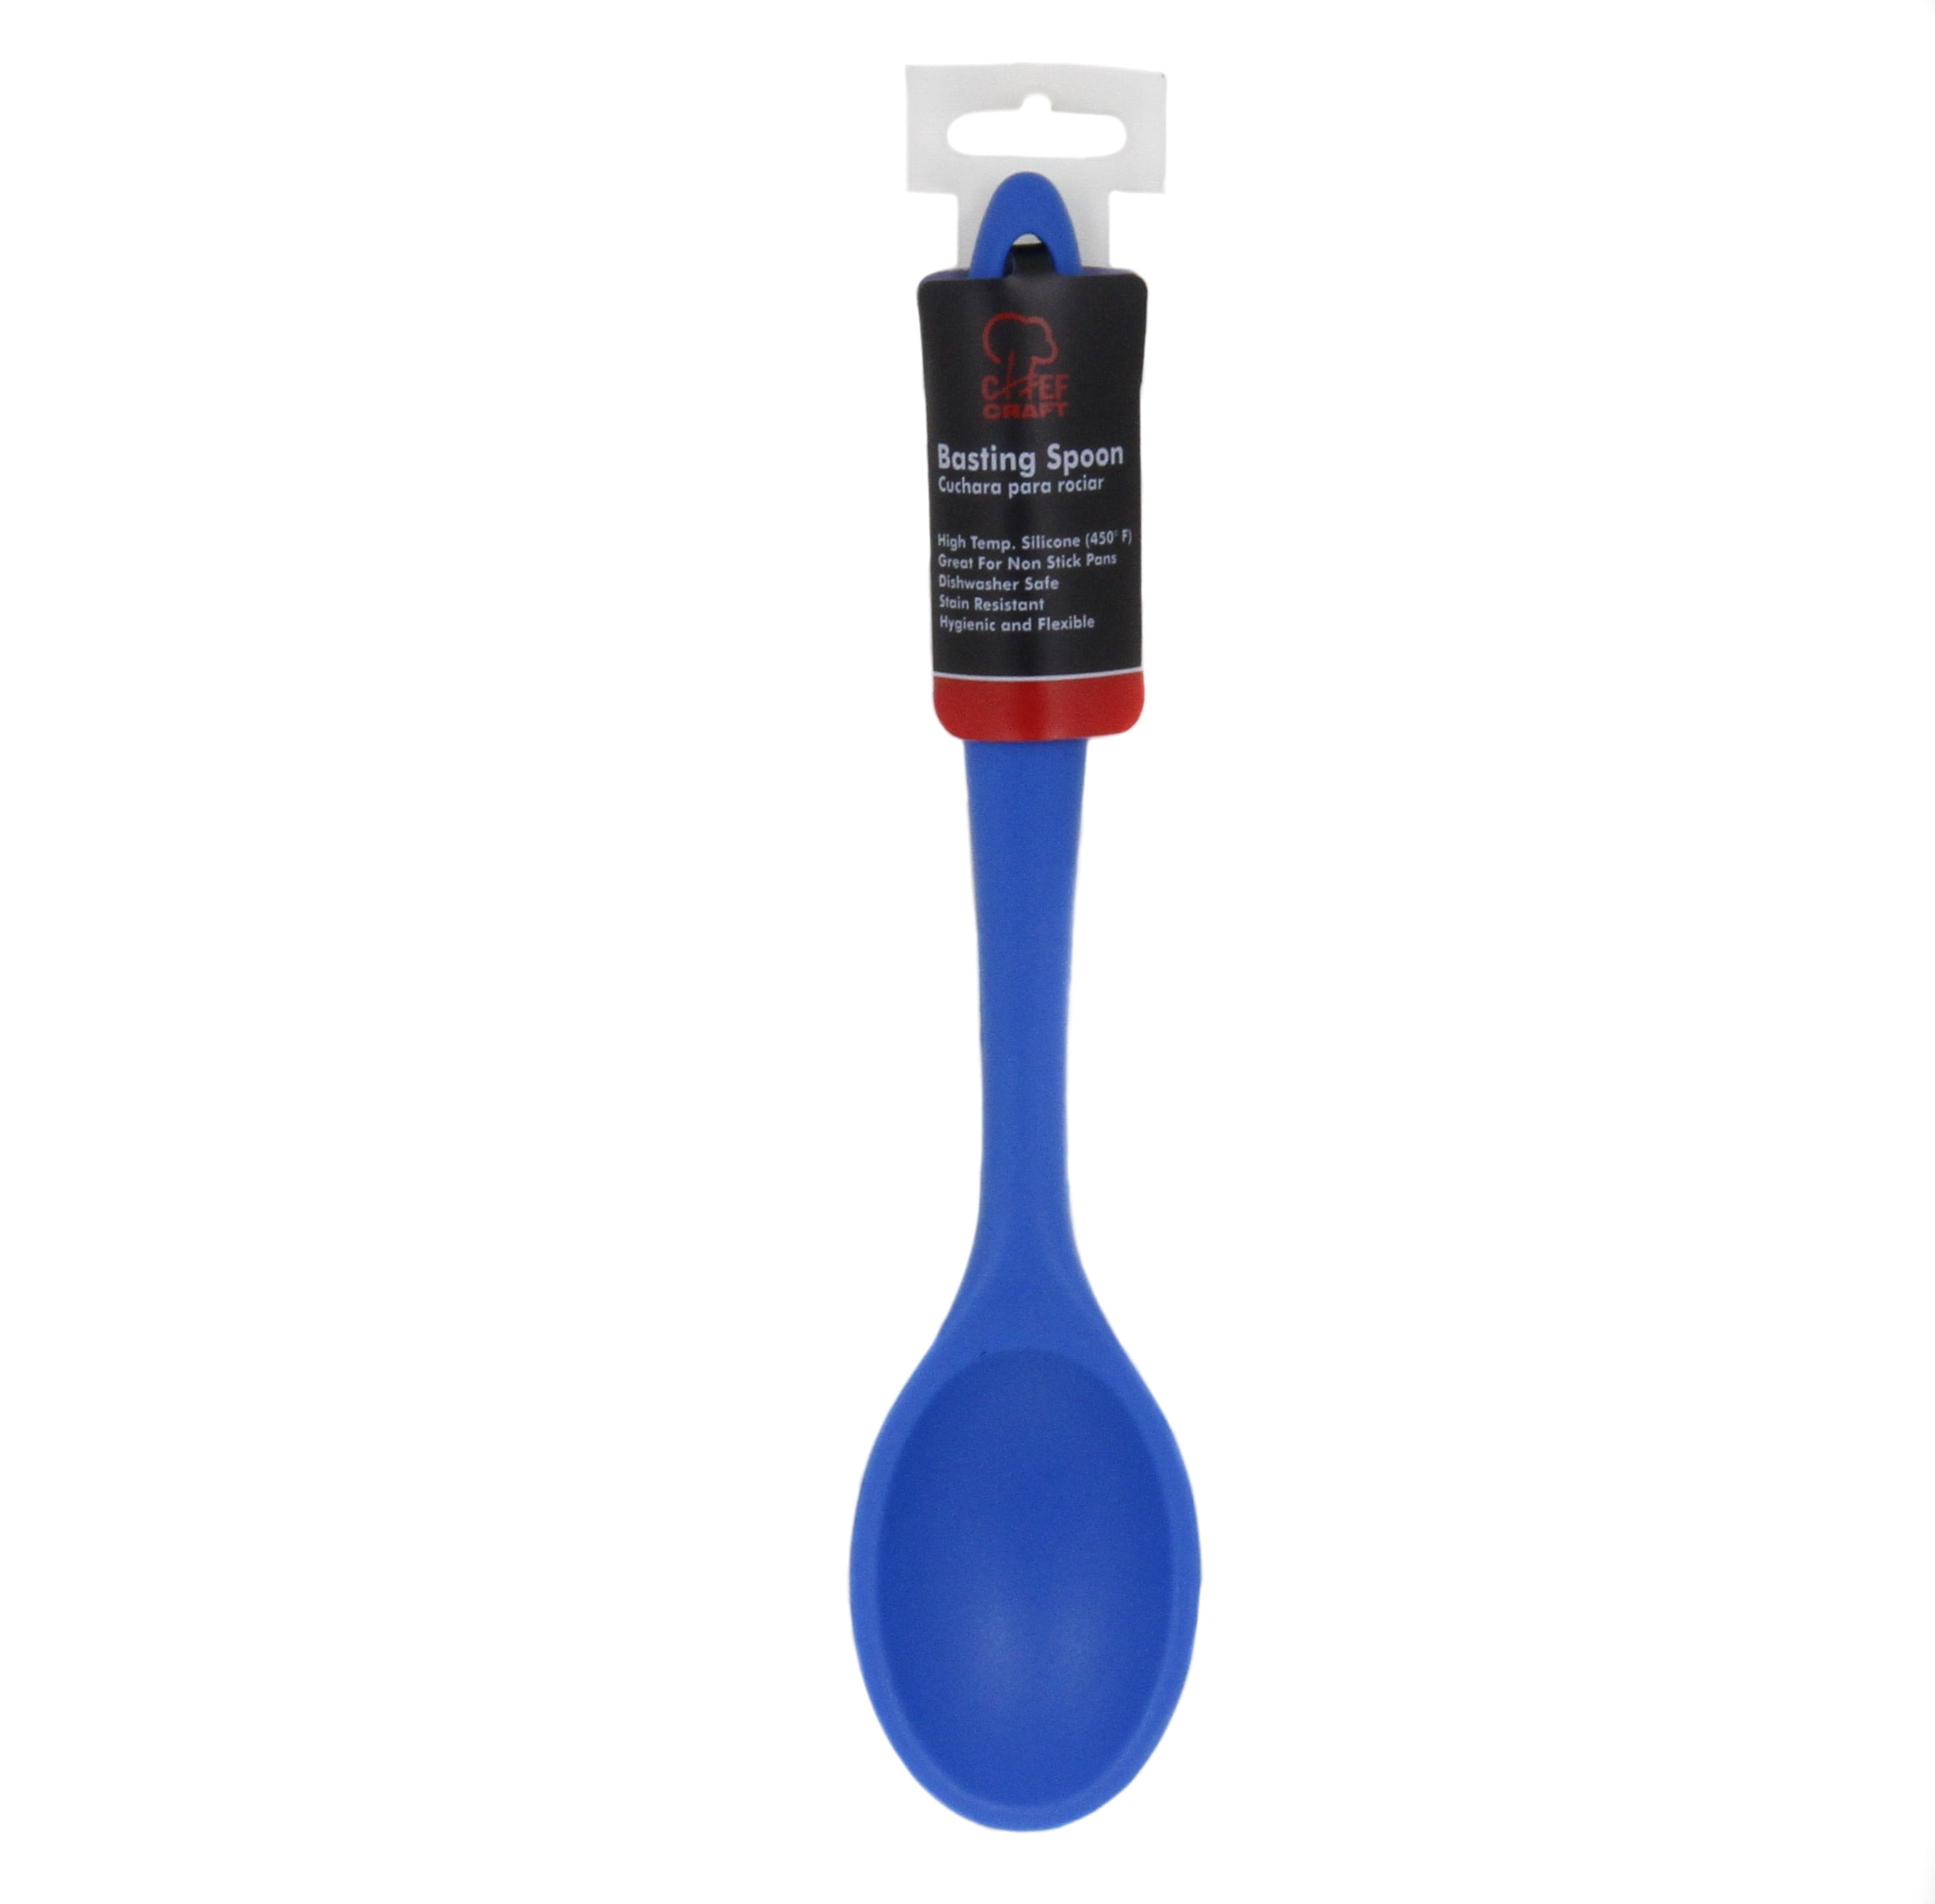 Silicone spoon set, short - Sebra Eat - Vintage blue –